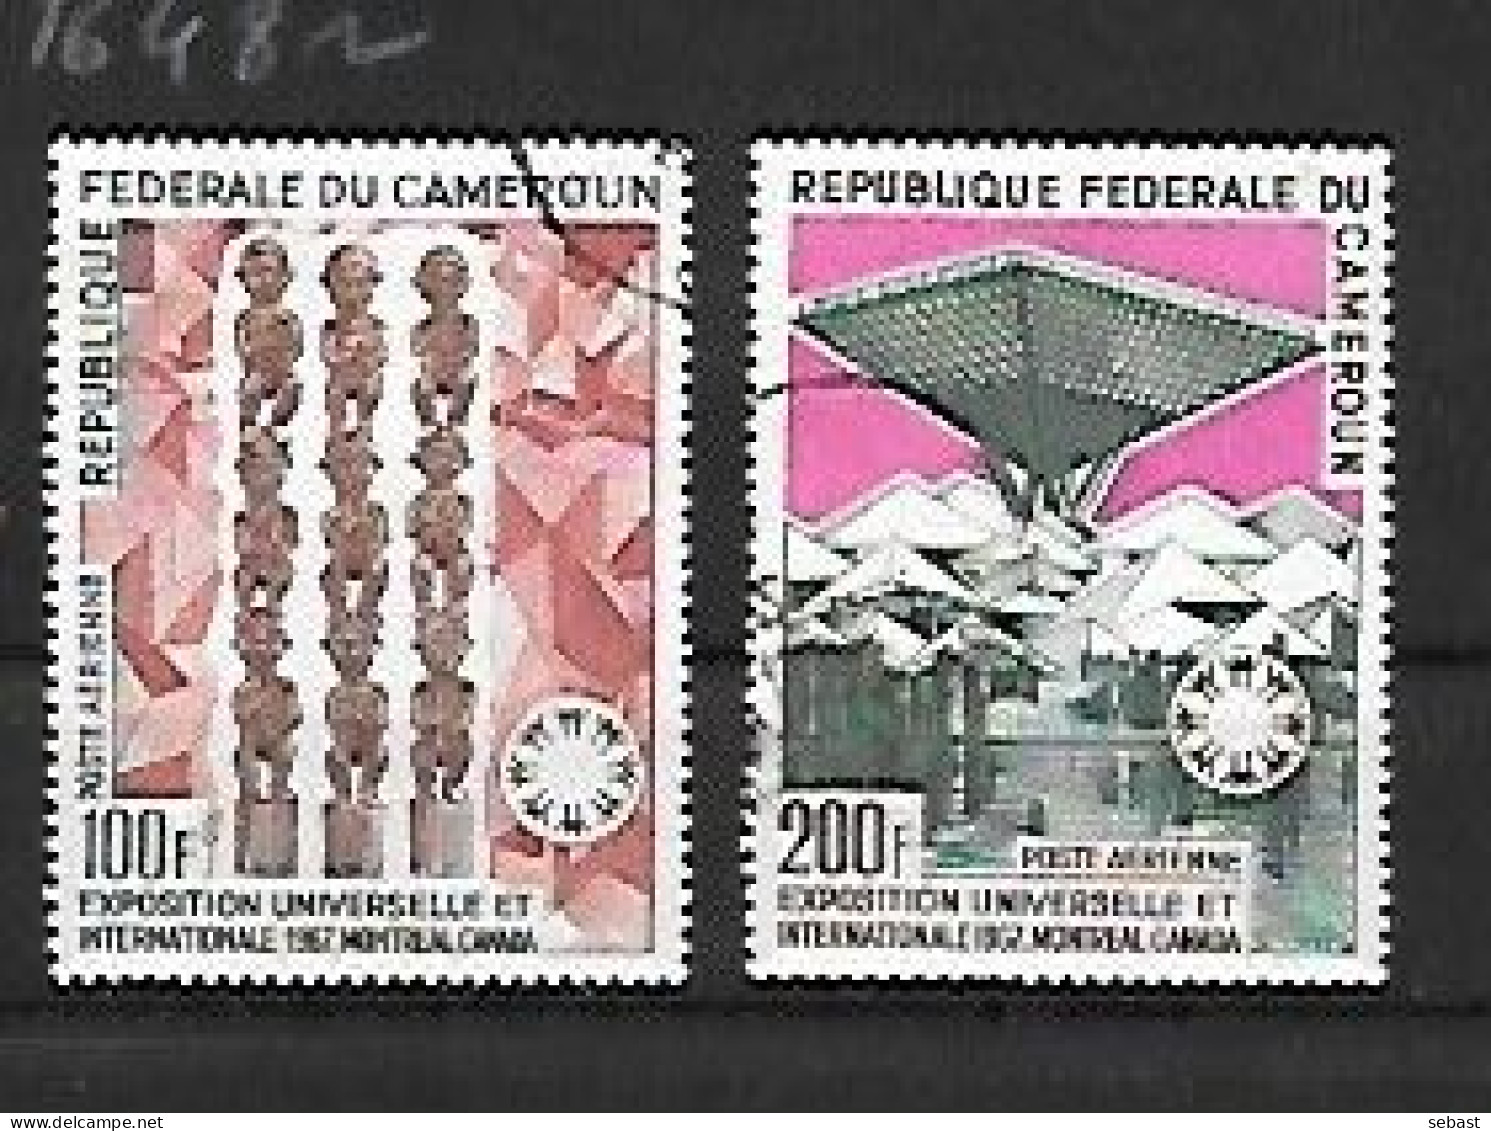 TIMBRE OBLITERE DU CAMEROUN DE 1967 N° MICHEL 526/27 - Cameroon (1960-...)